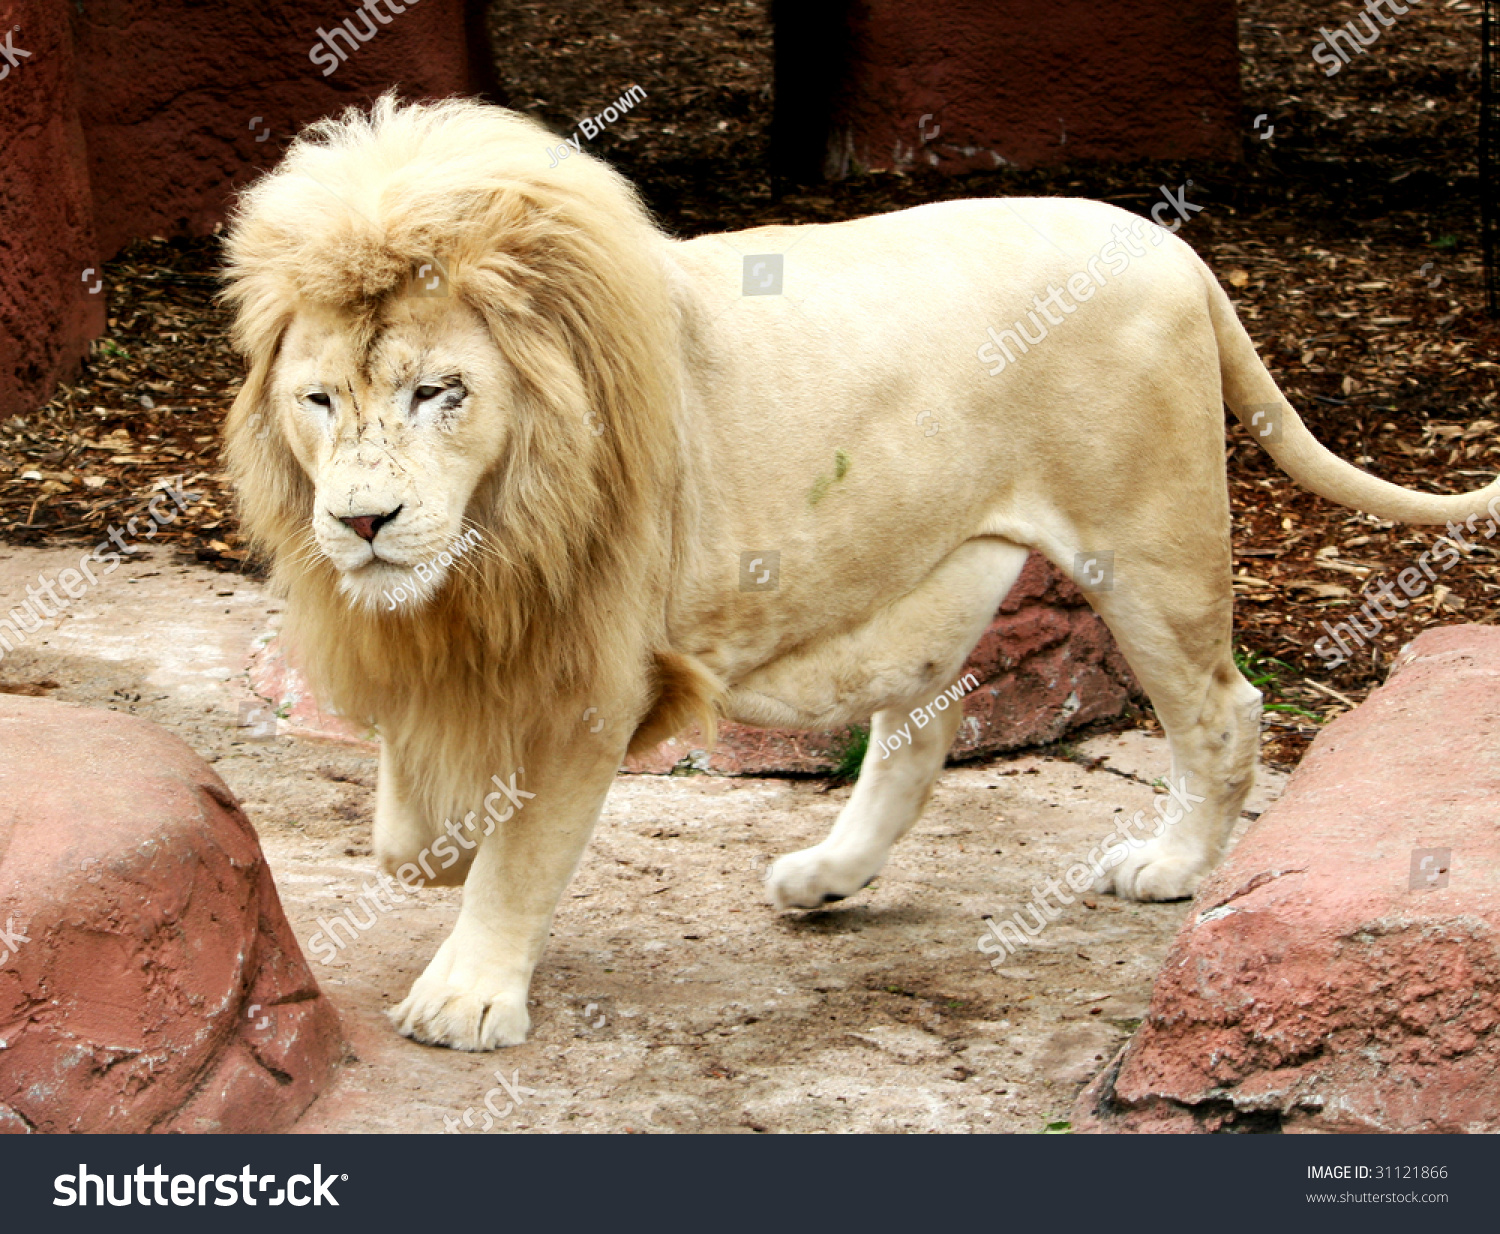 Handsome White Male Lion Stock Photo 31121866 : Shutterstock